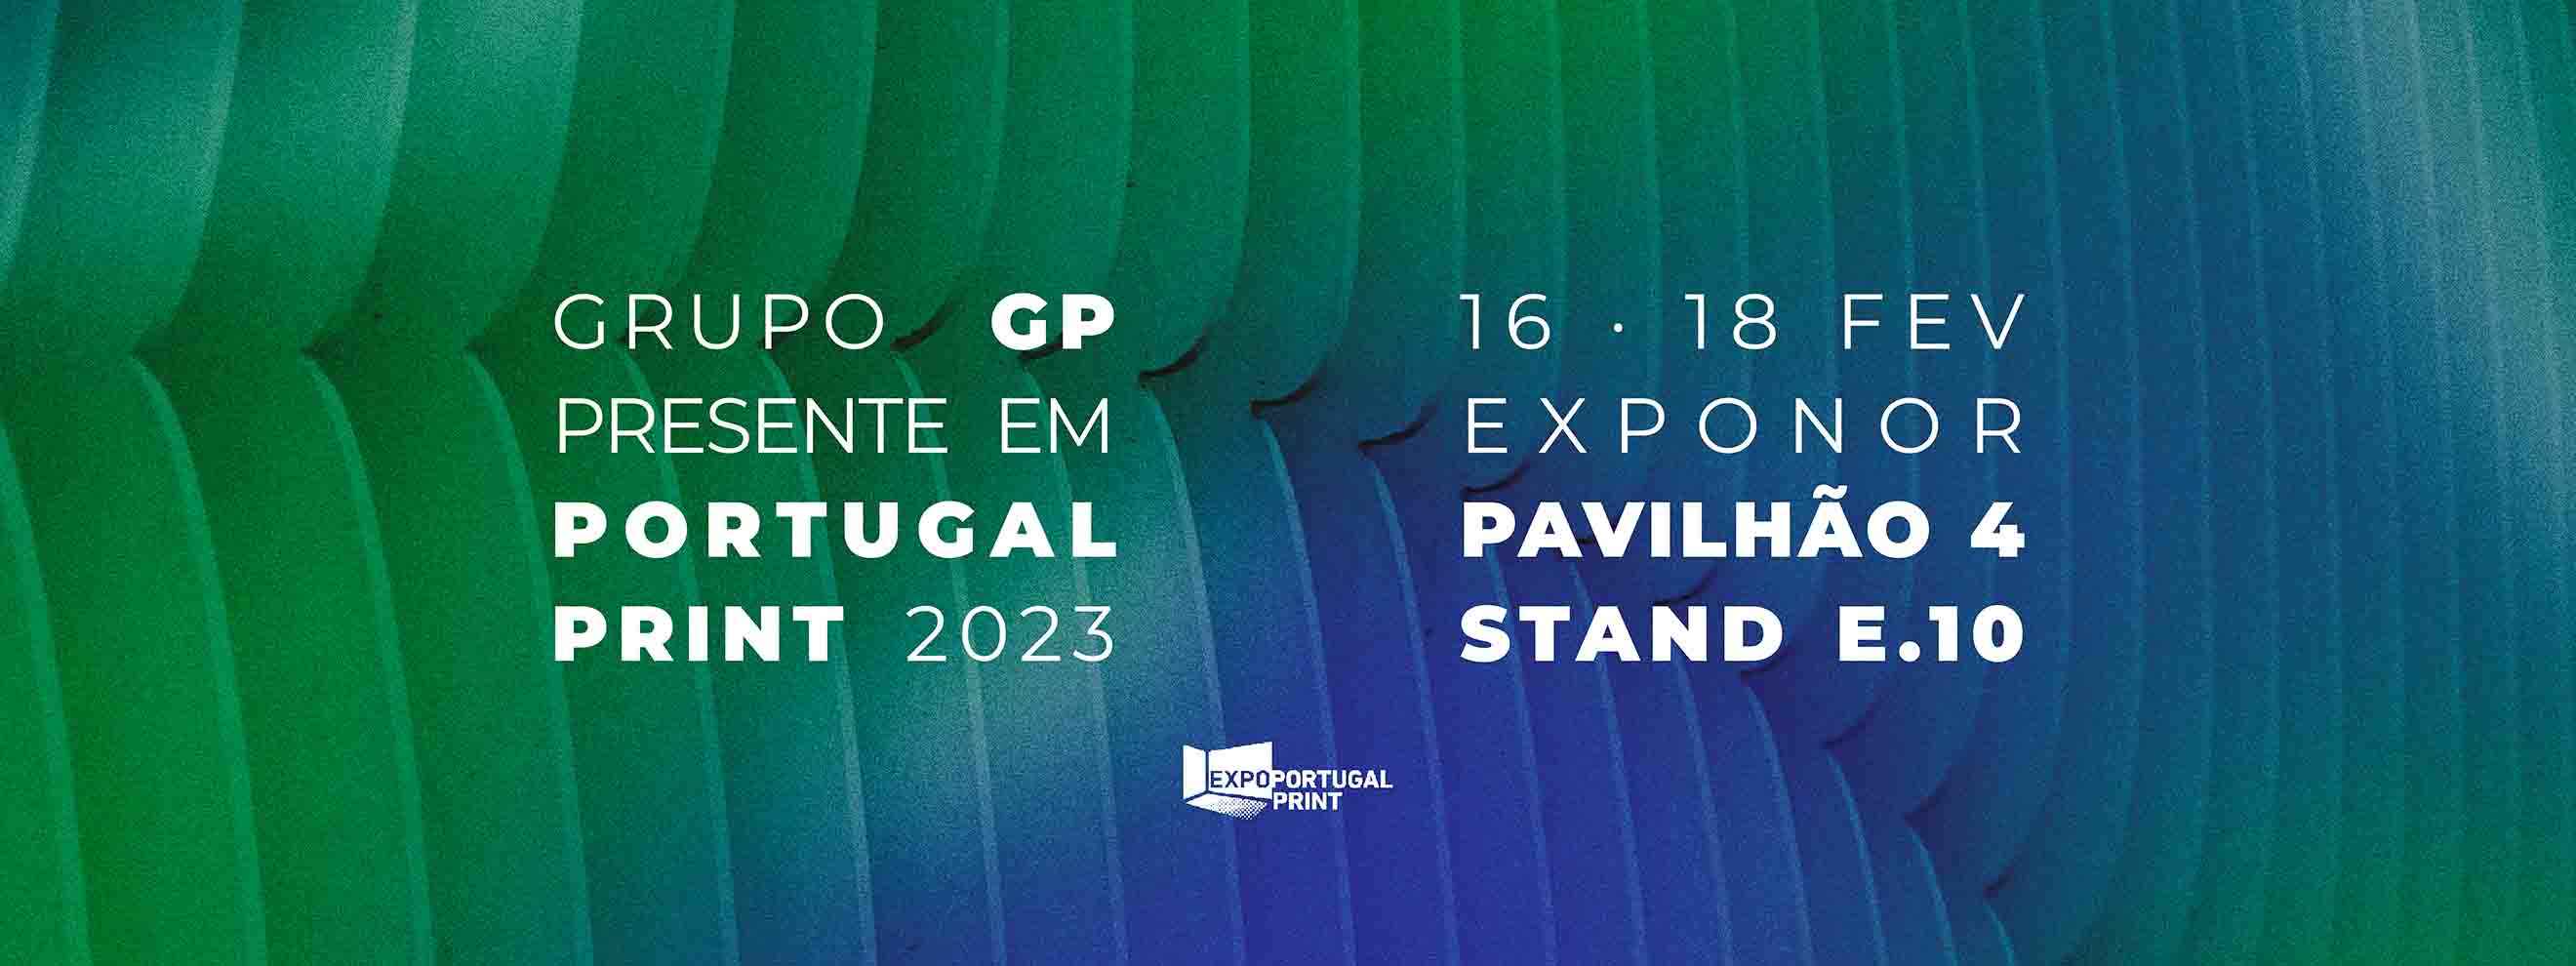 Expo Portugal GRUPO GP